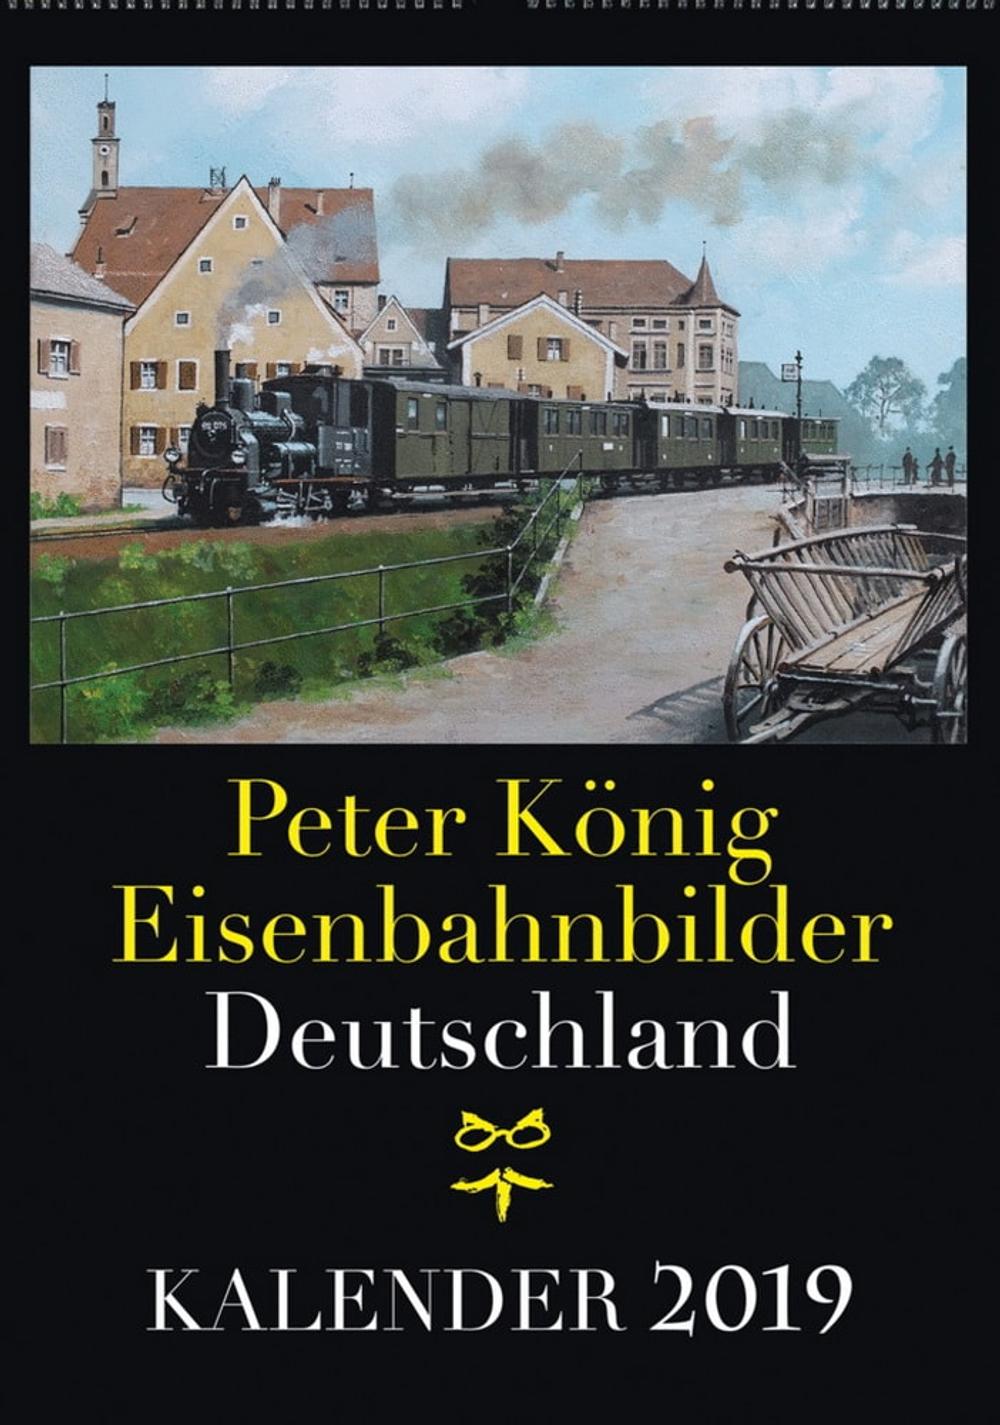 Titelbild Kalender 2019 „Peter König Eisenbahnbilder Deutschland“